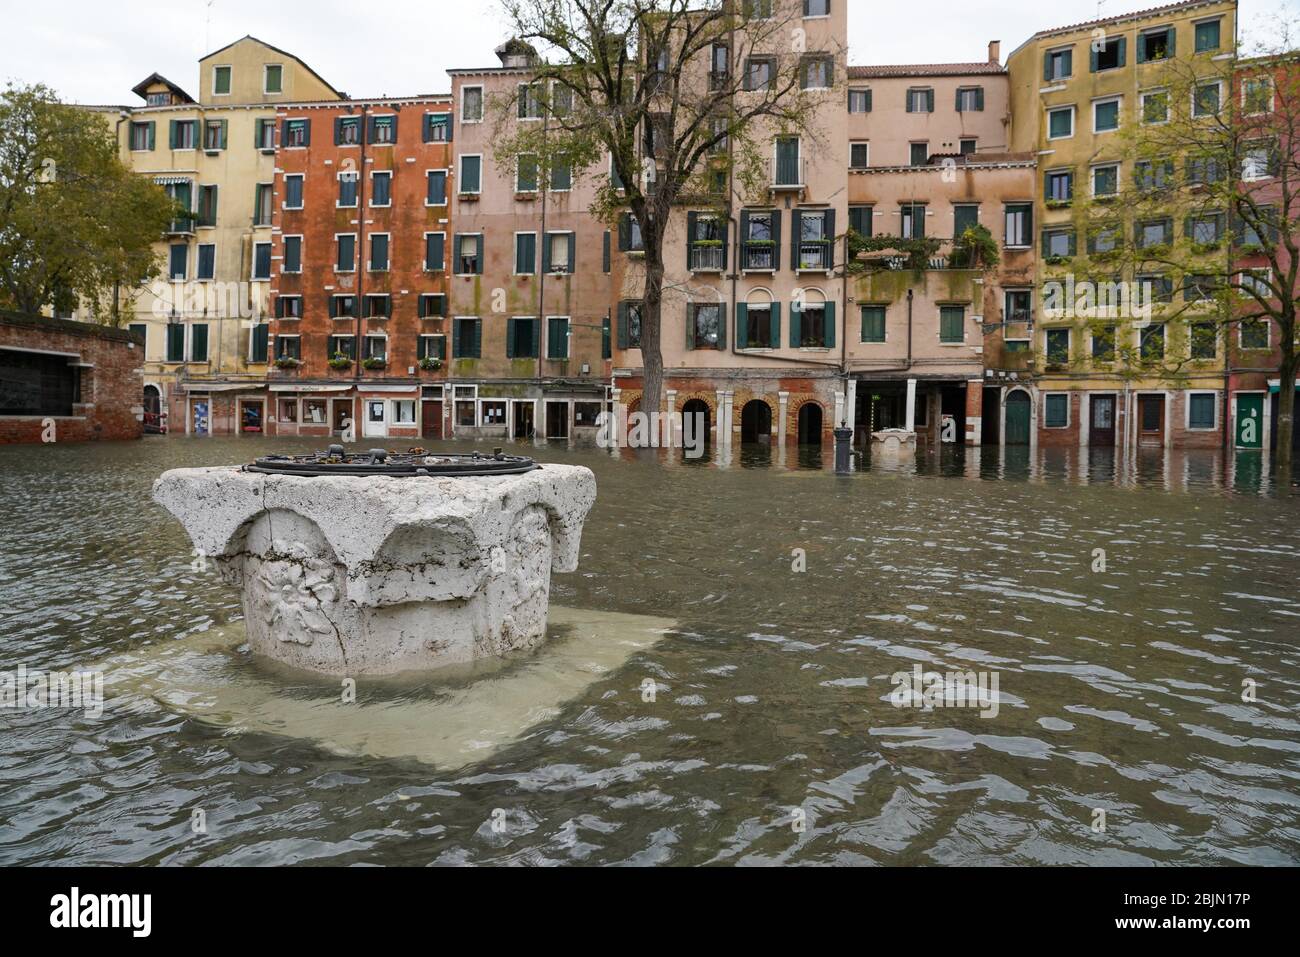 Marea alta en Venecia, plaza Ghetto, noviembre de 2019, Venecia, Italia, Europa Foto de stock